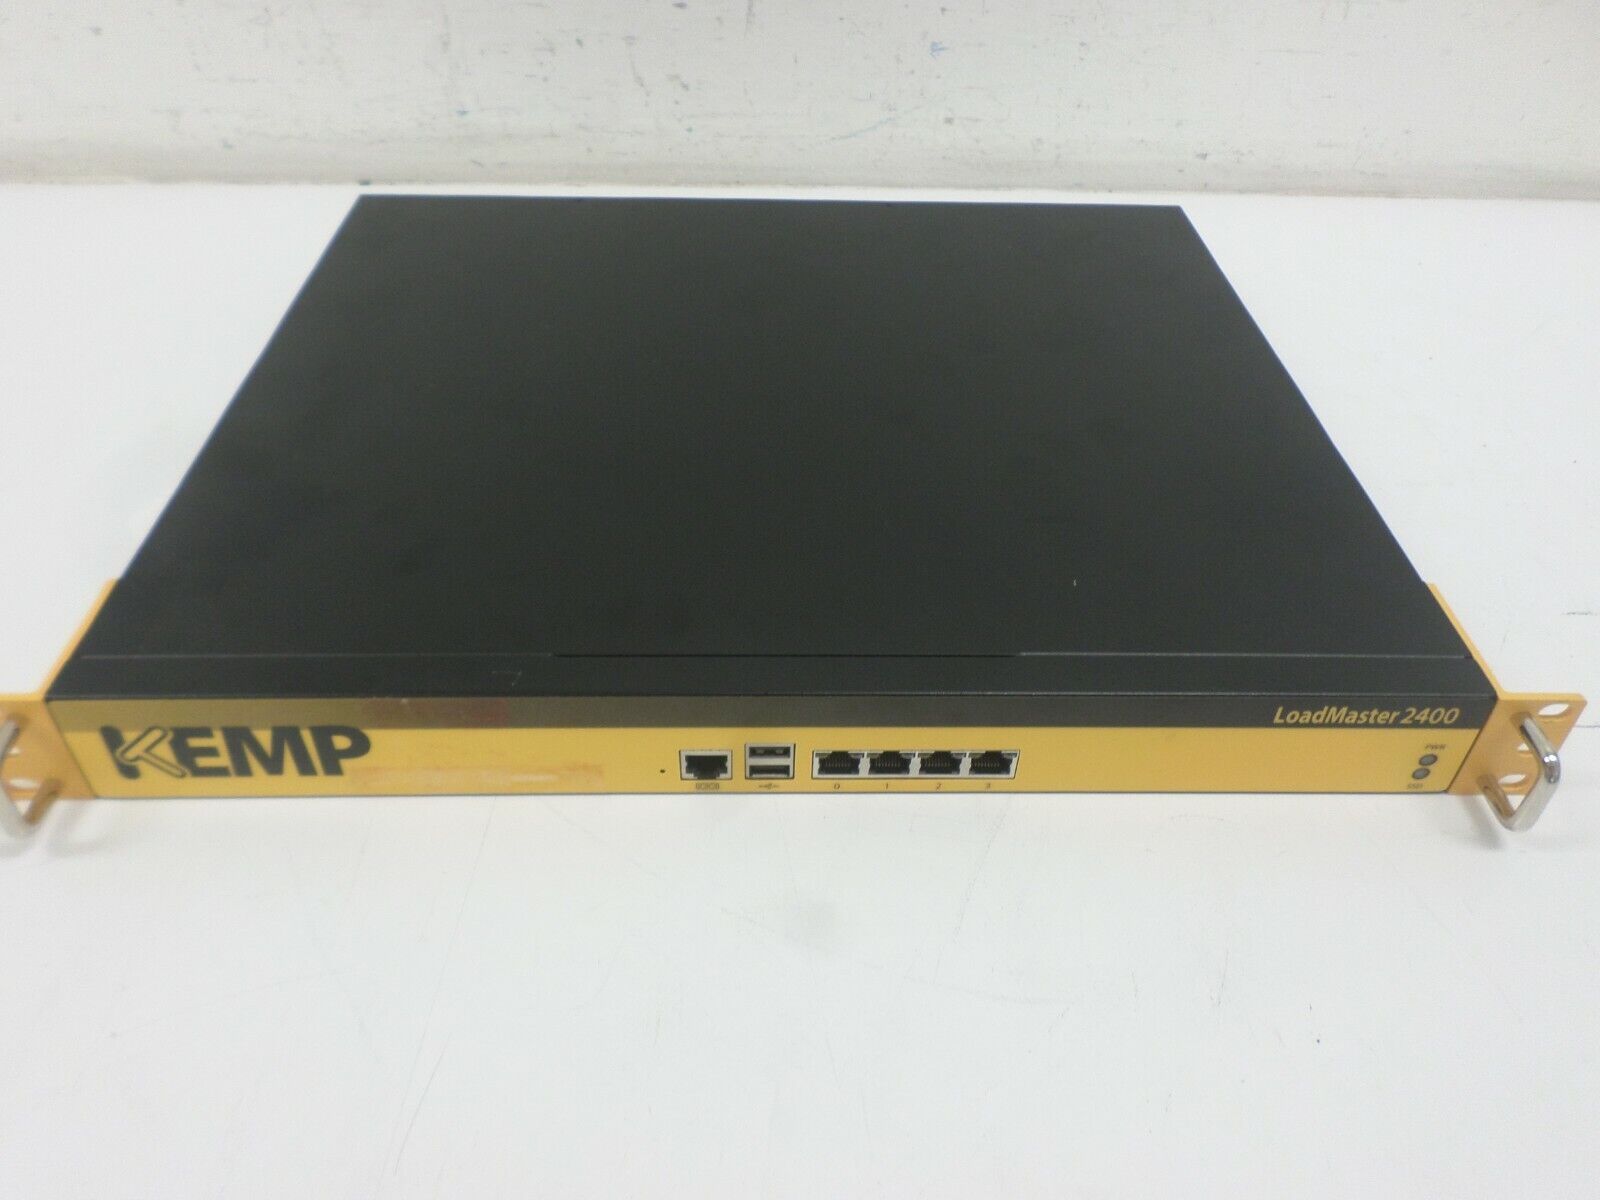 Kemp LoadMaster 2400 Network Load Balancer